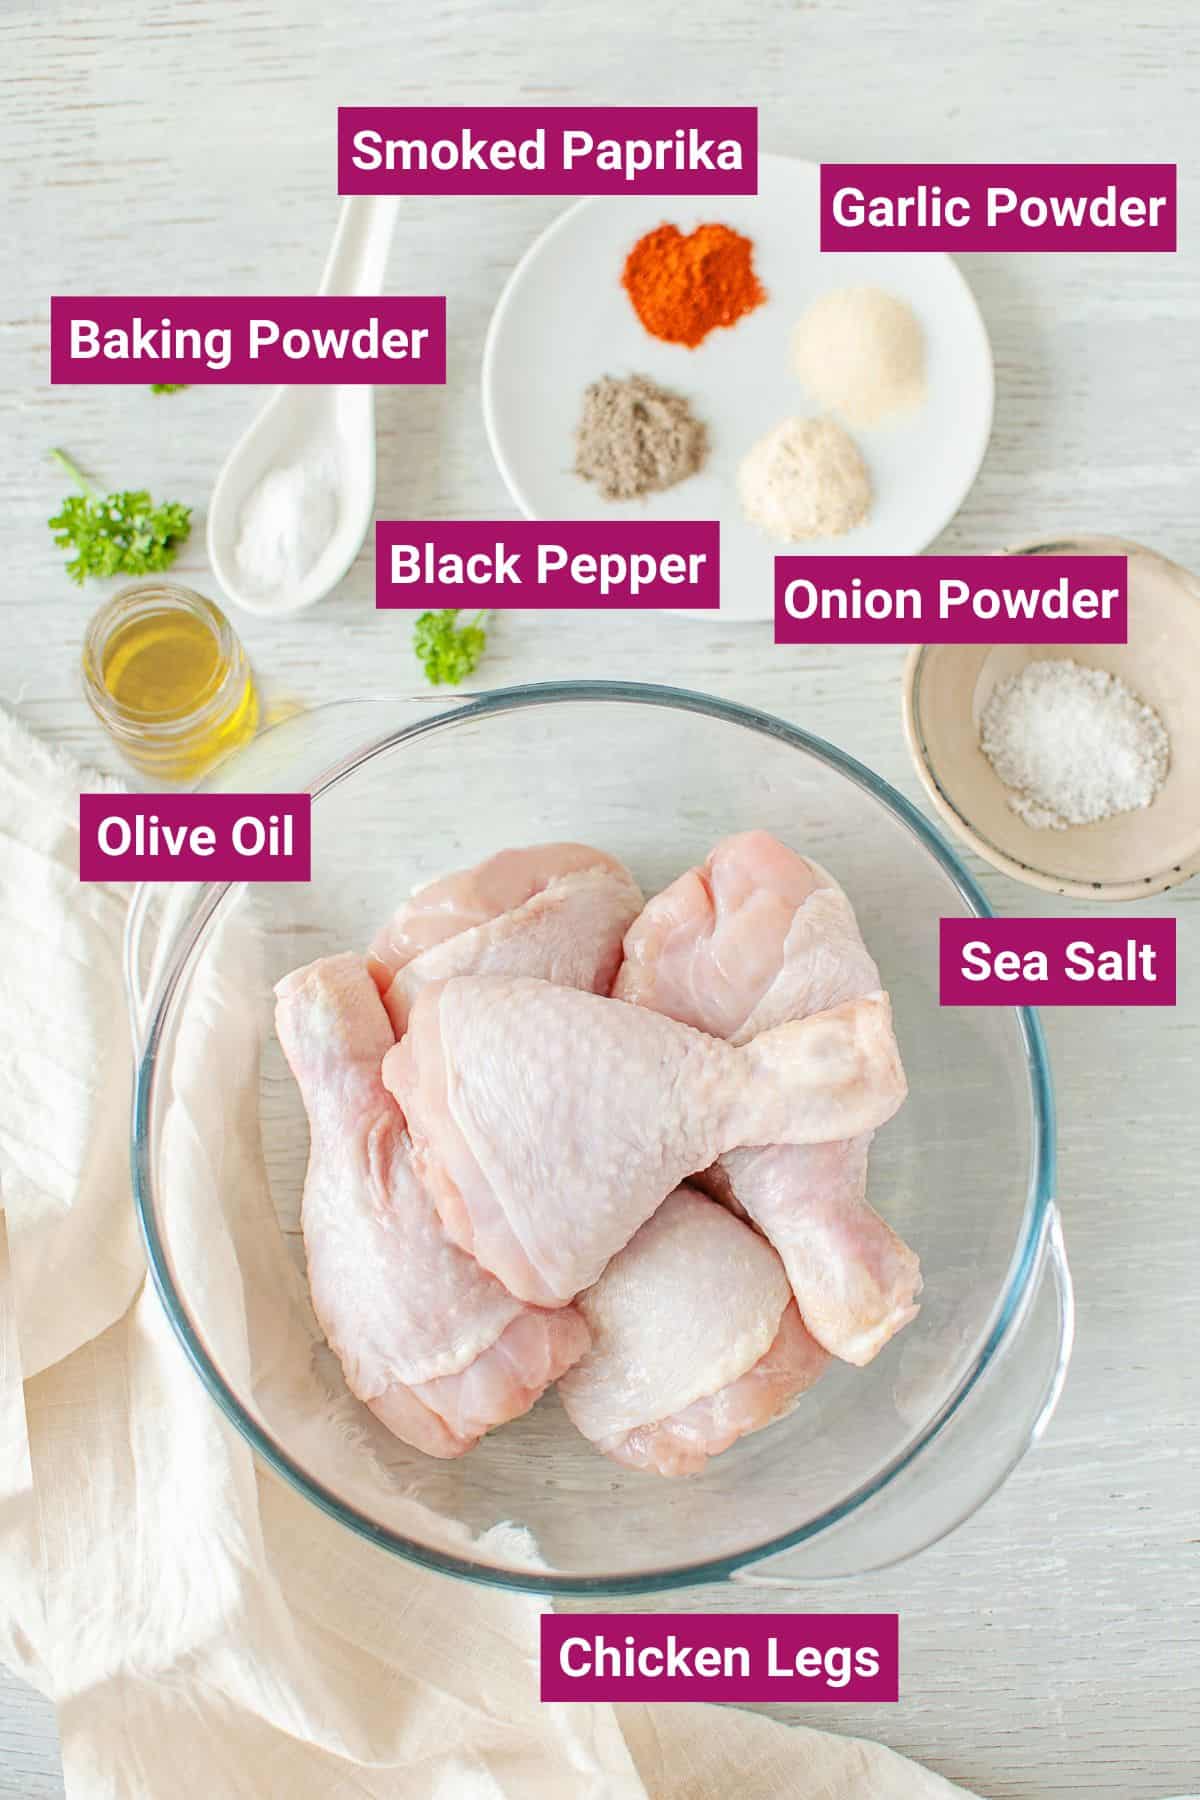 Chicken Legs,, Natural Ancient Sea Salt, Black Pepper, Smoked Paprika, Garlic Powder, Onion Powder, Baking Powder, Olive Oil on separate bowls